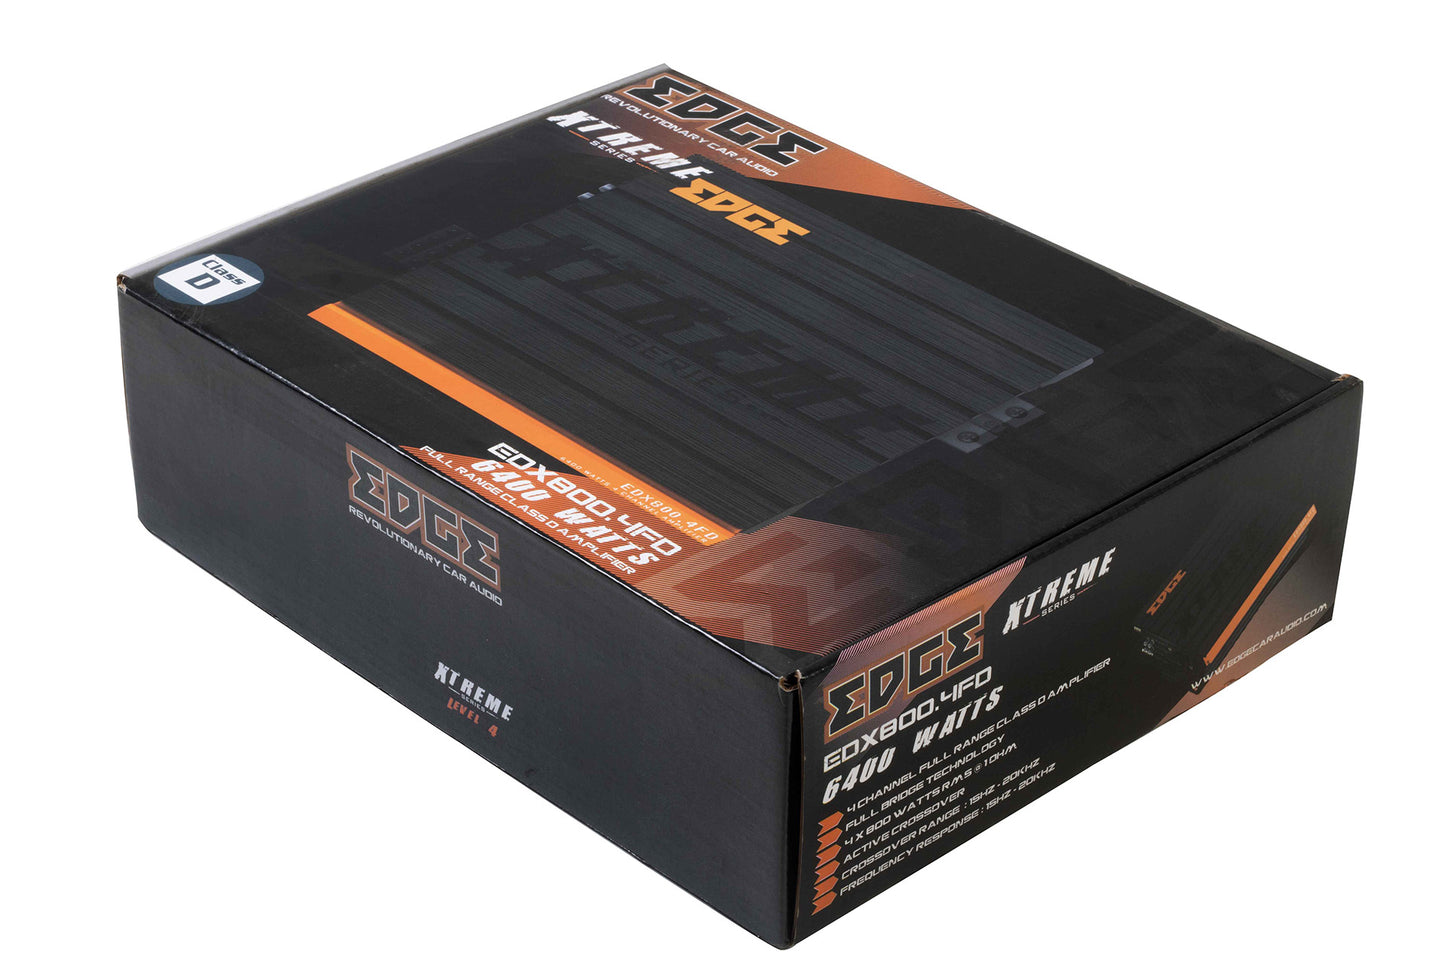 EDX800.4FD-E0 | EDGE Xtreme Series 4 Channel 6400 watts Amplifier